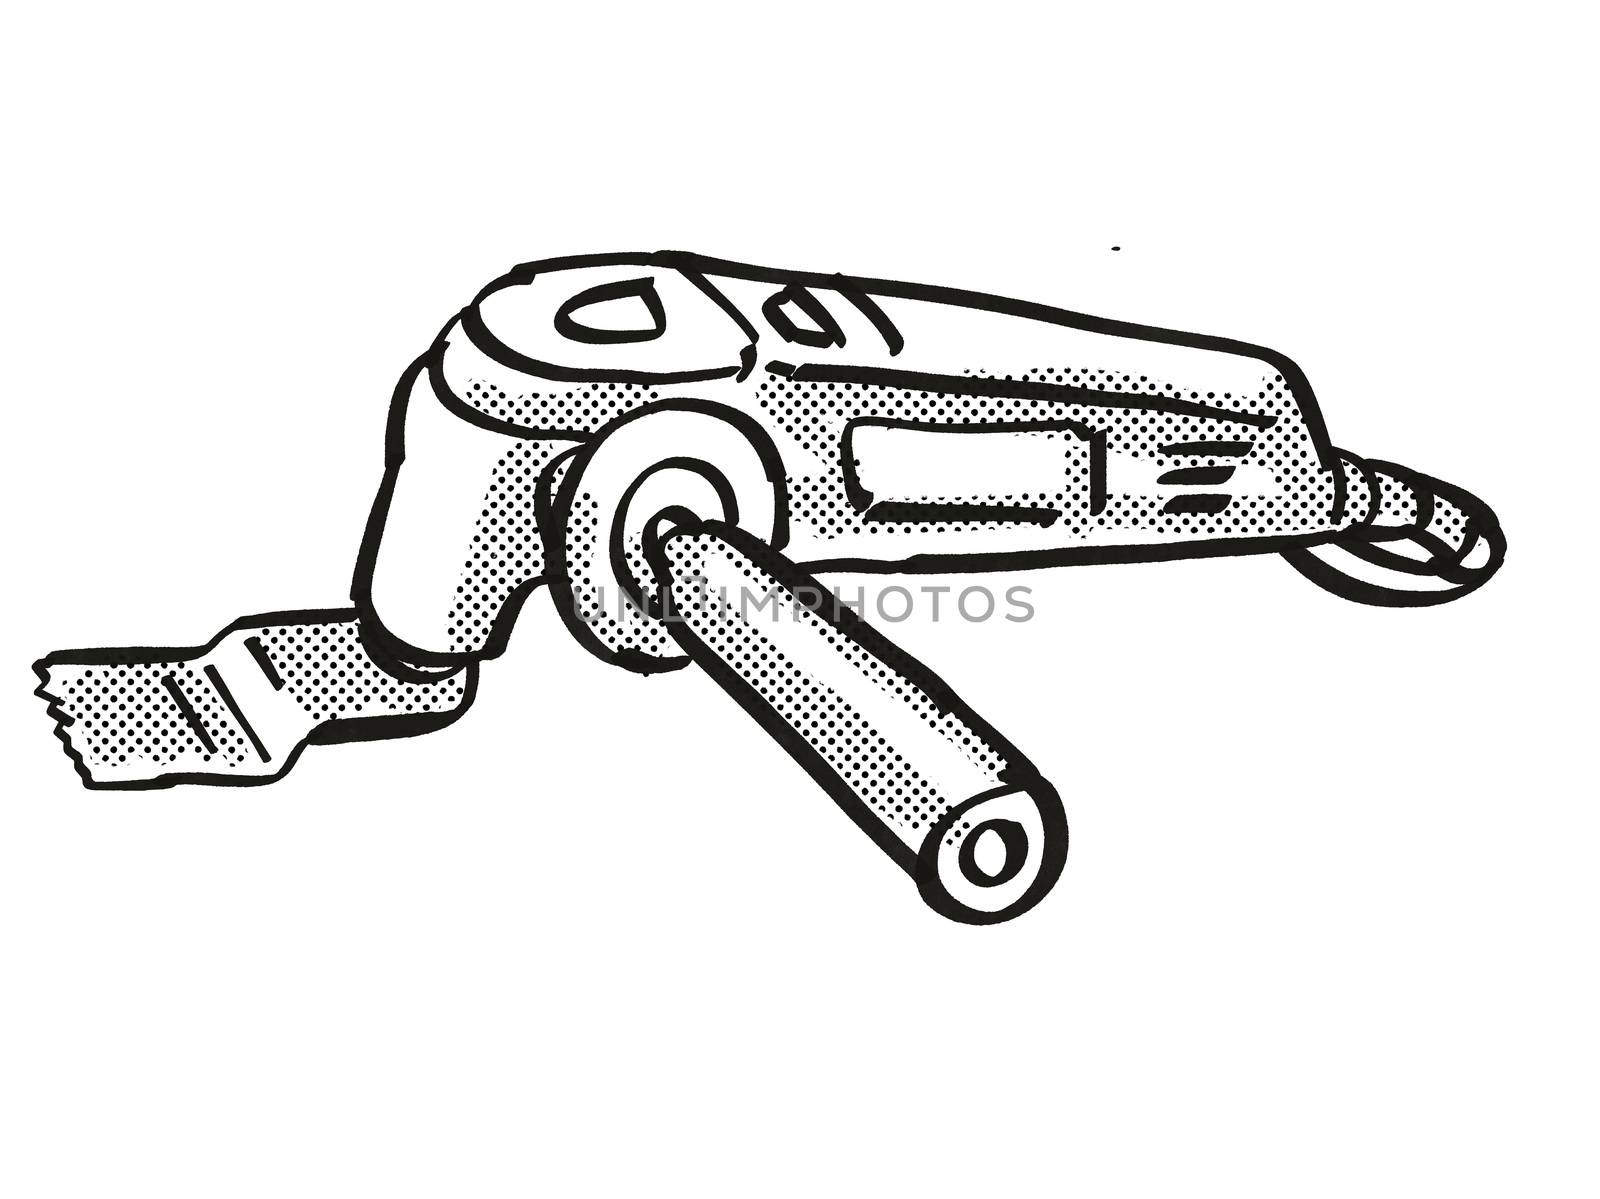 Multi Function Tool Power Tool Equipment Cartoon Retro Drawing by patrimonio